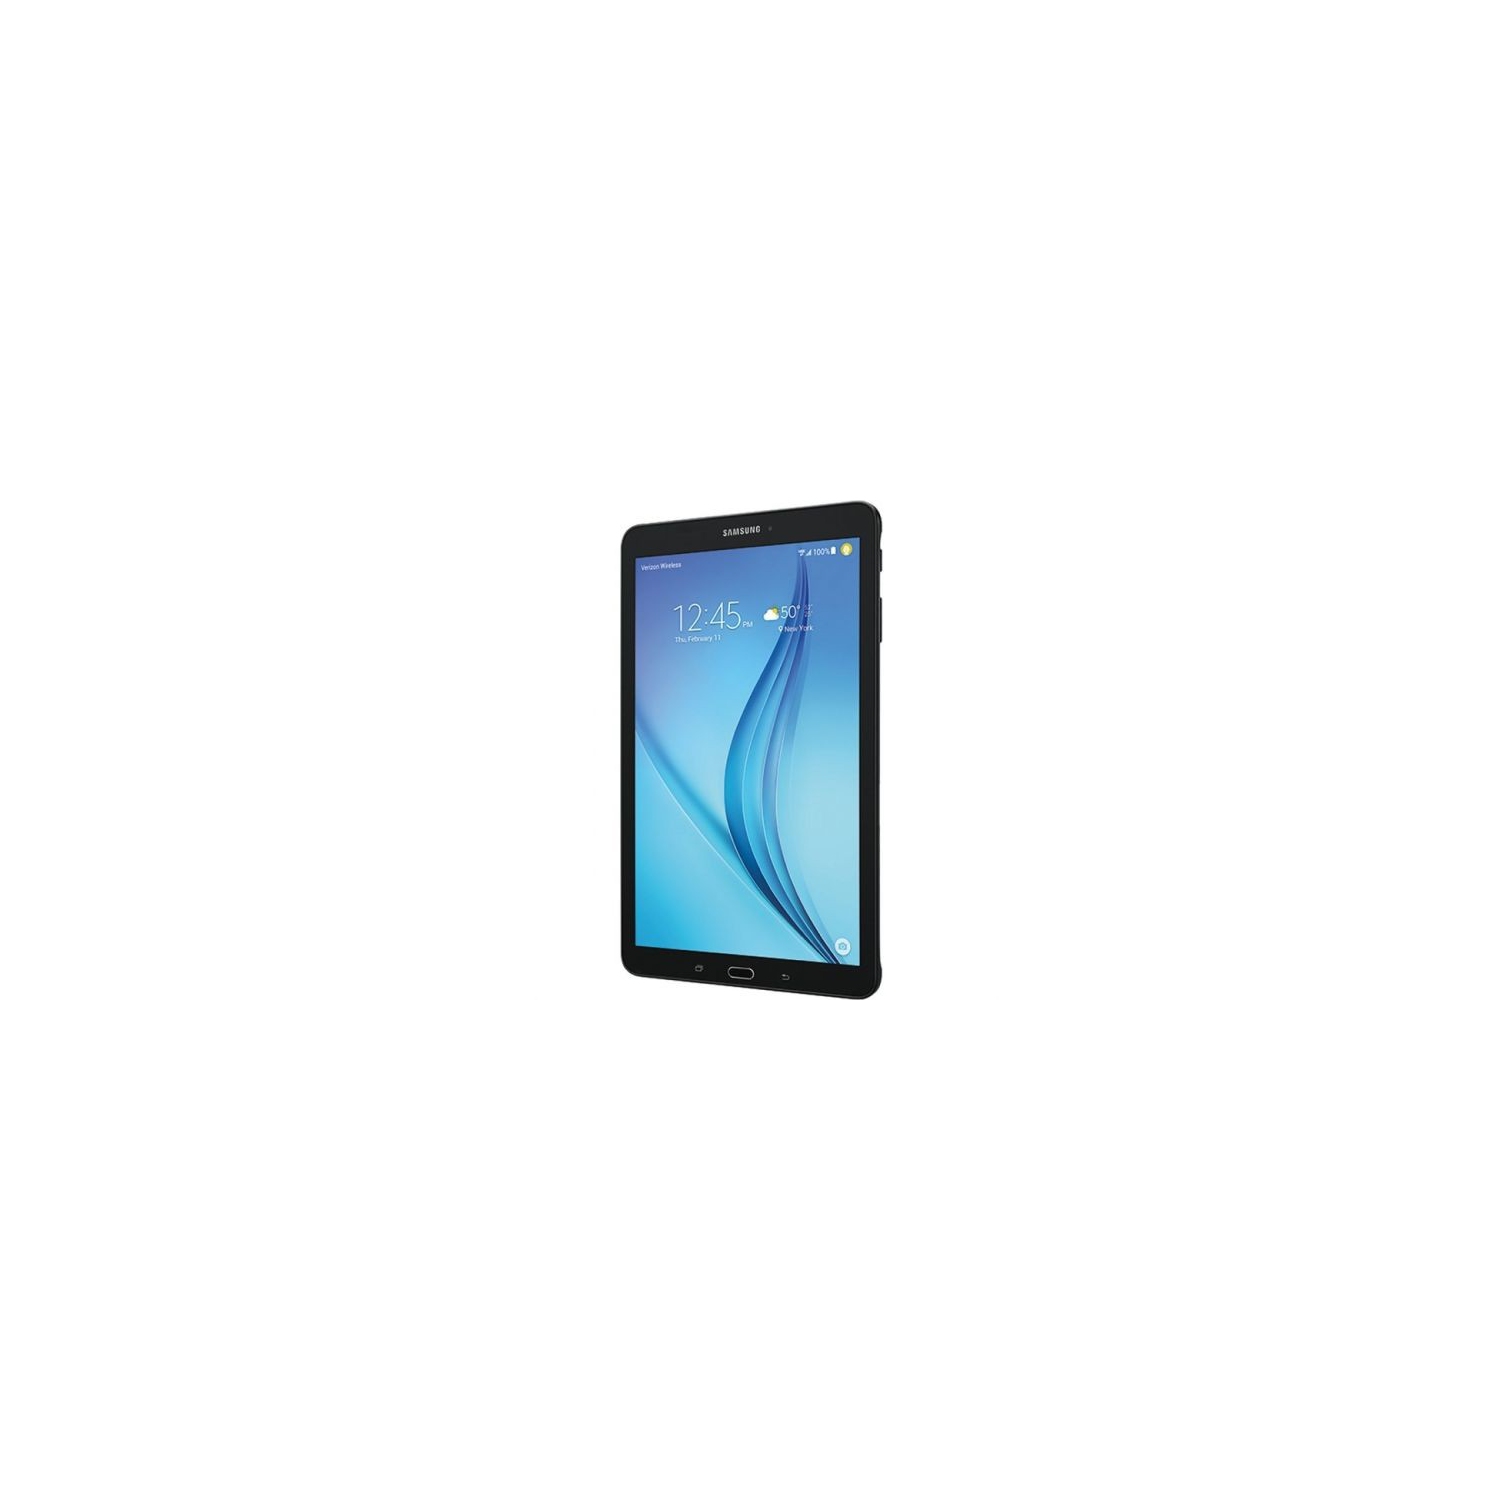 Refurbished (Good) - Samsung Galaxy Tab E 8" 16GB Black Canadian Model WIFI+LTE Unlocked T377W